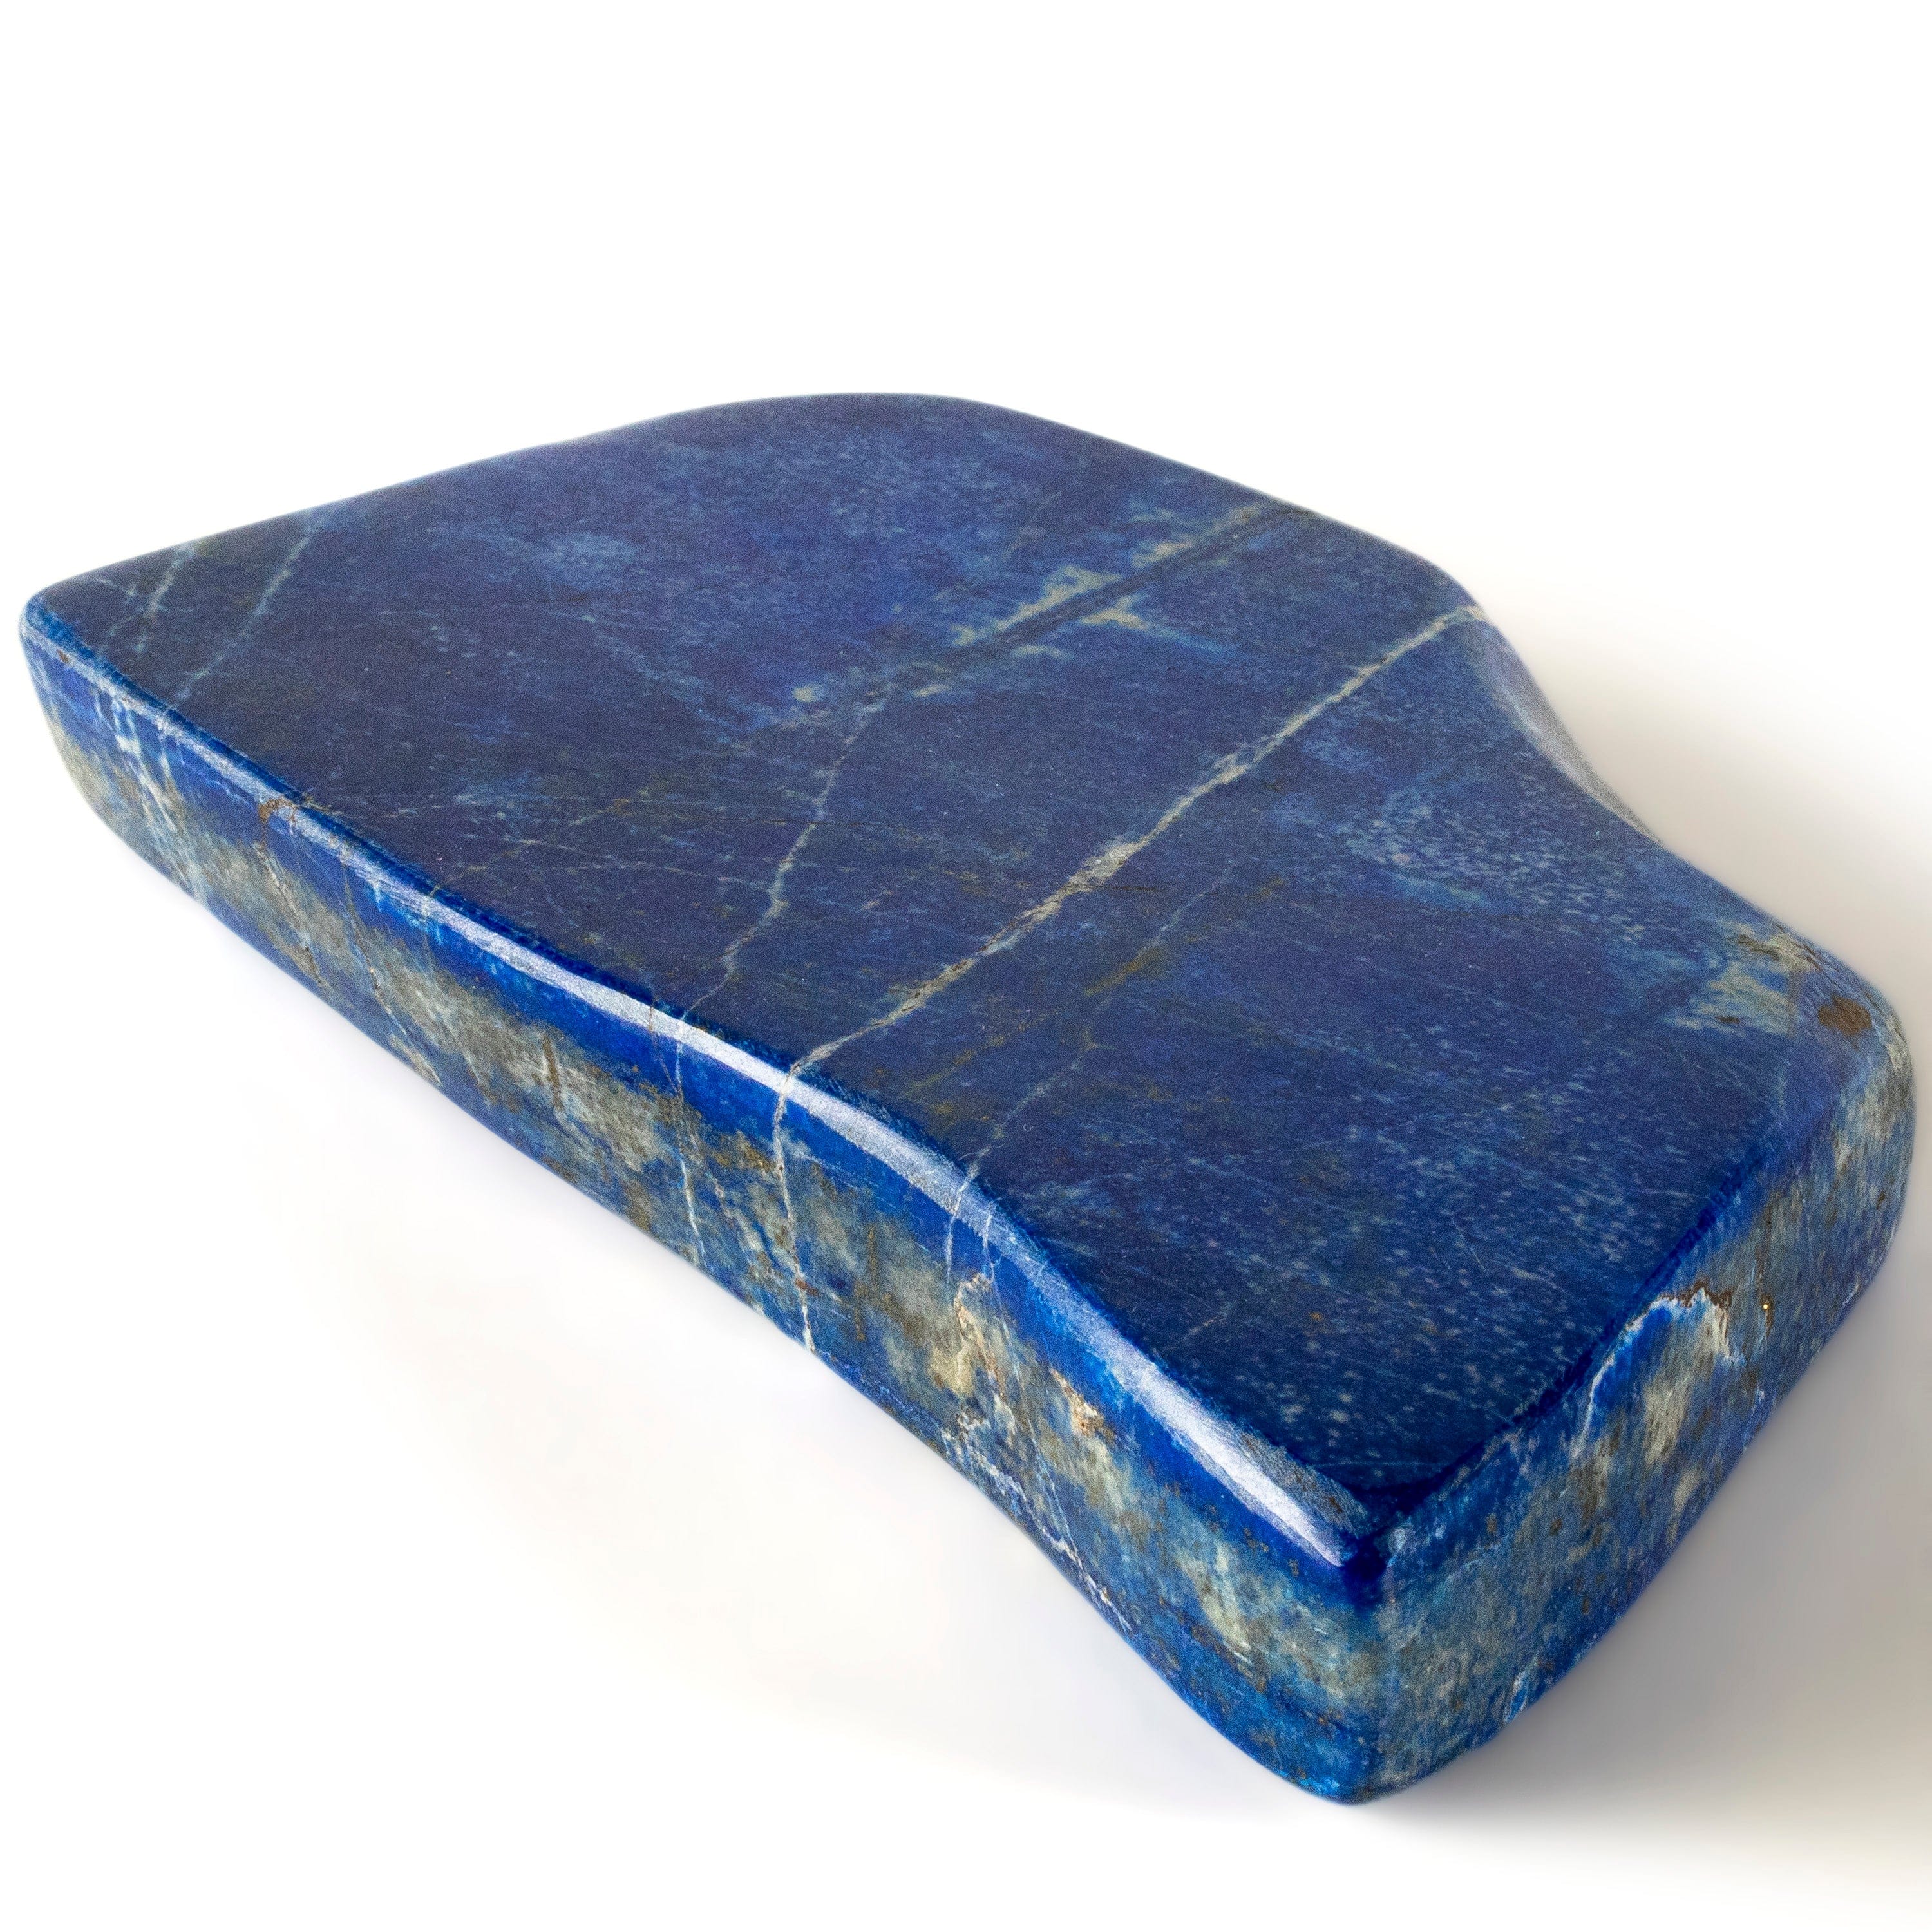 Kalifano Lapis Lapis Lazuli Freeform from Afghanistan - 7" / 1,070 grams LP1100.008